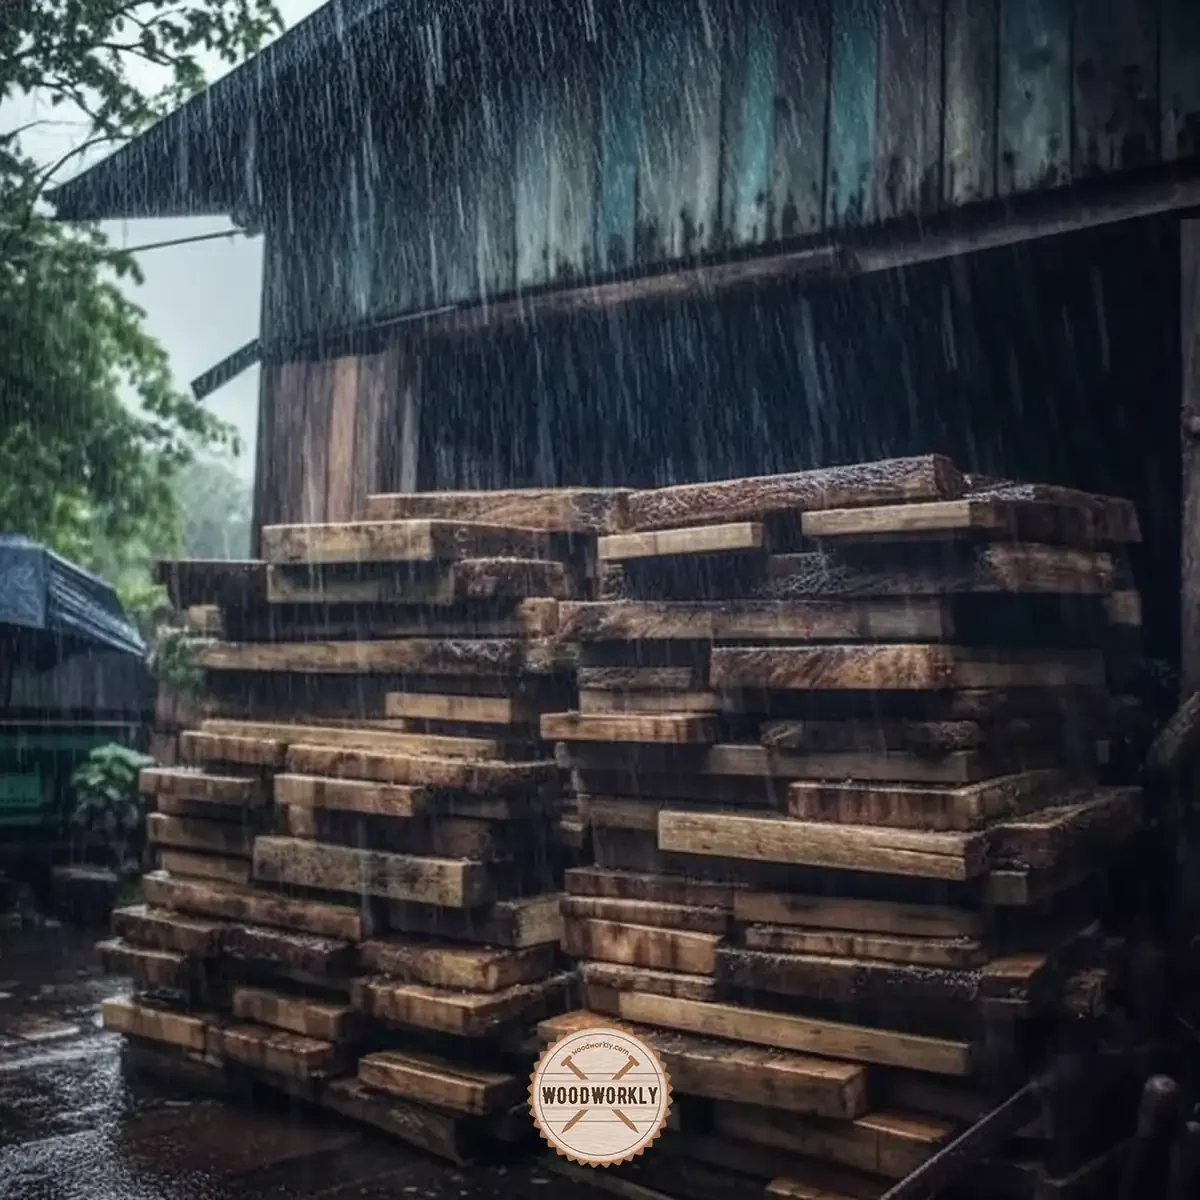 wood stacks impacted by rain